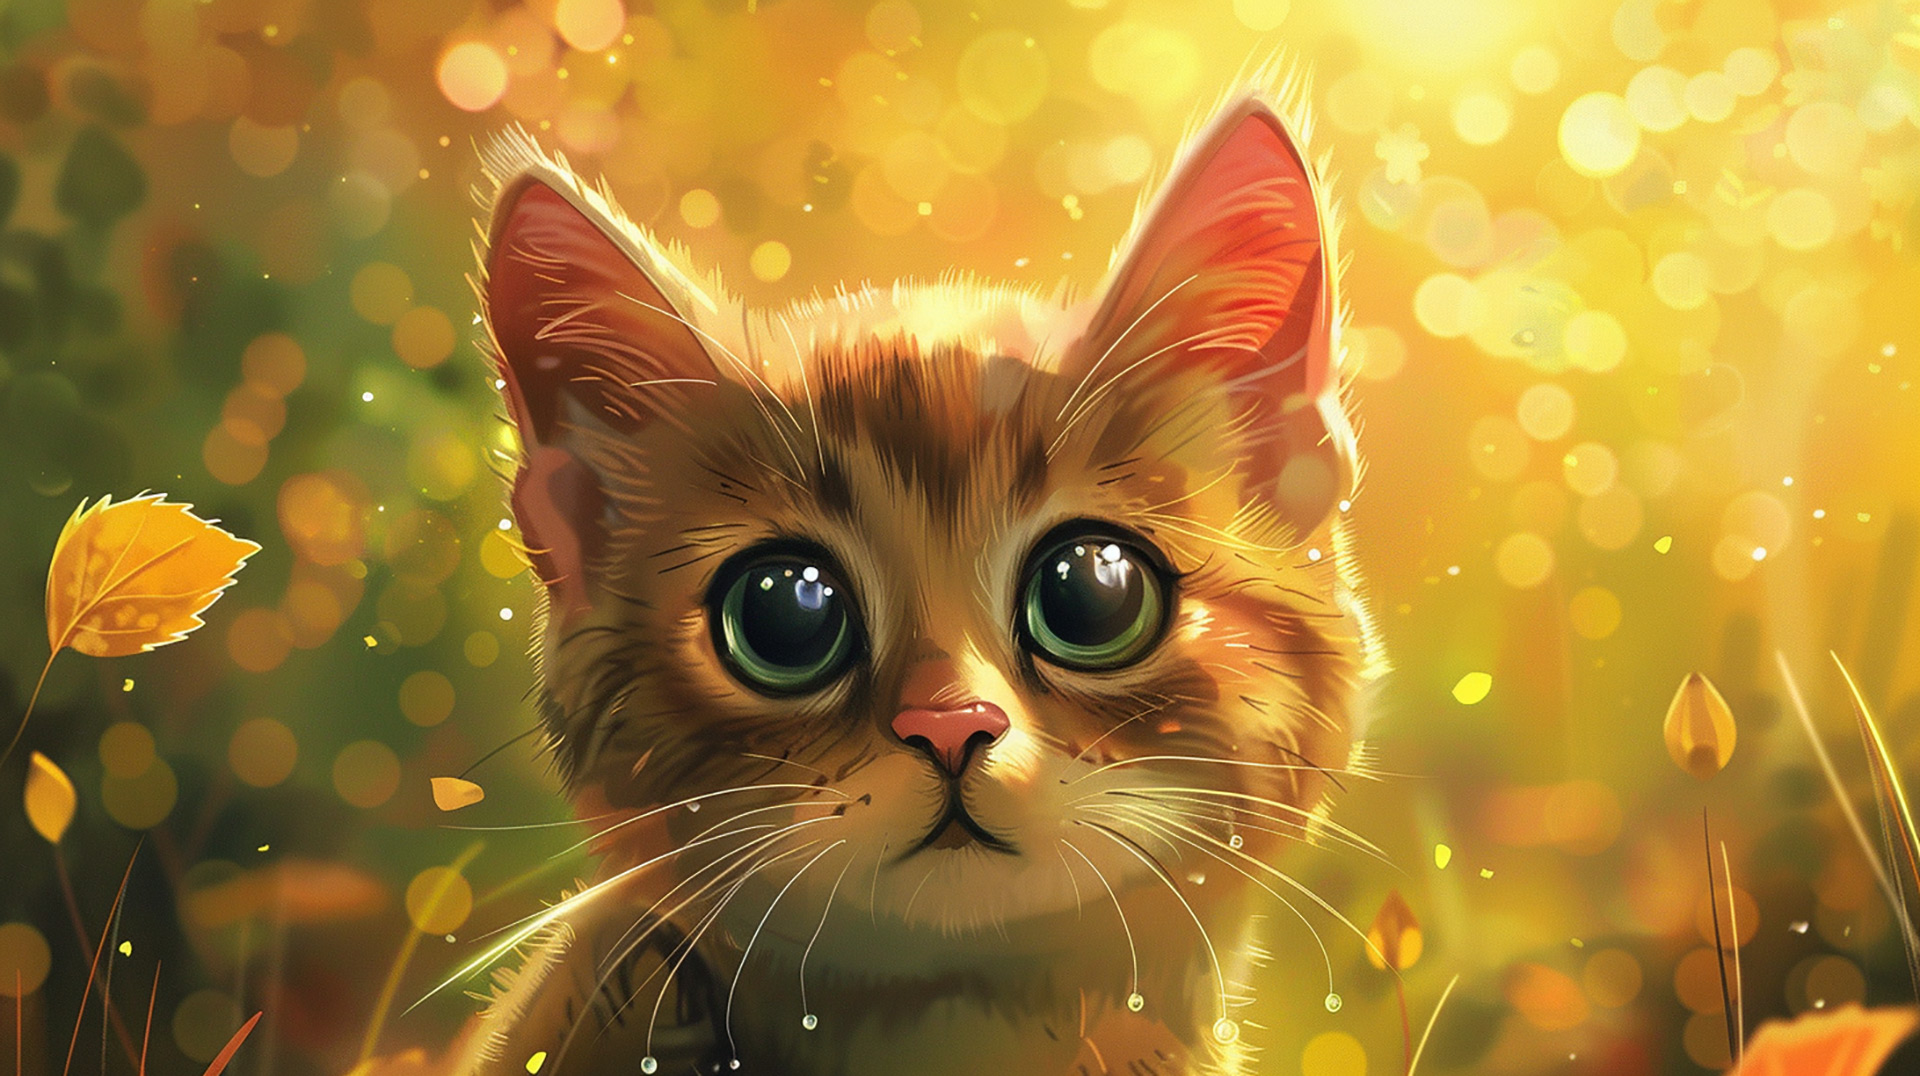 Adorable Cute Cat Wallpapers in Ultra HD for Desktop